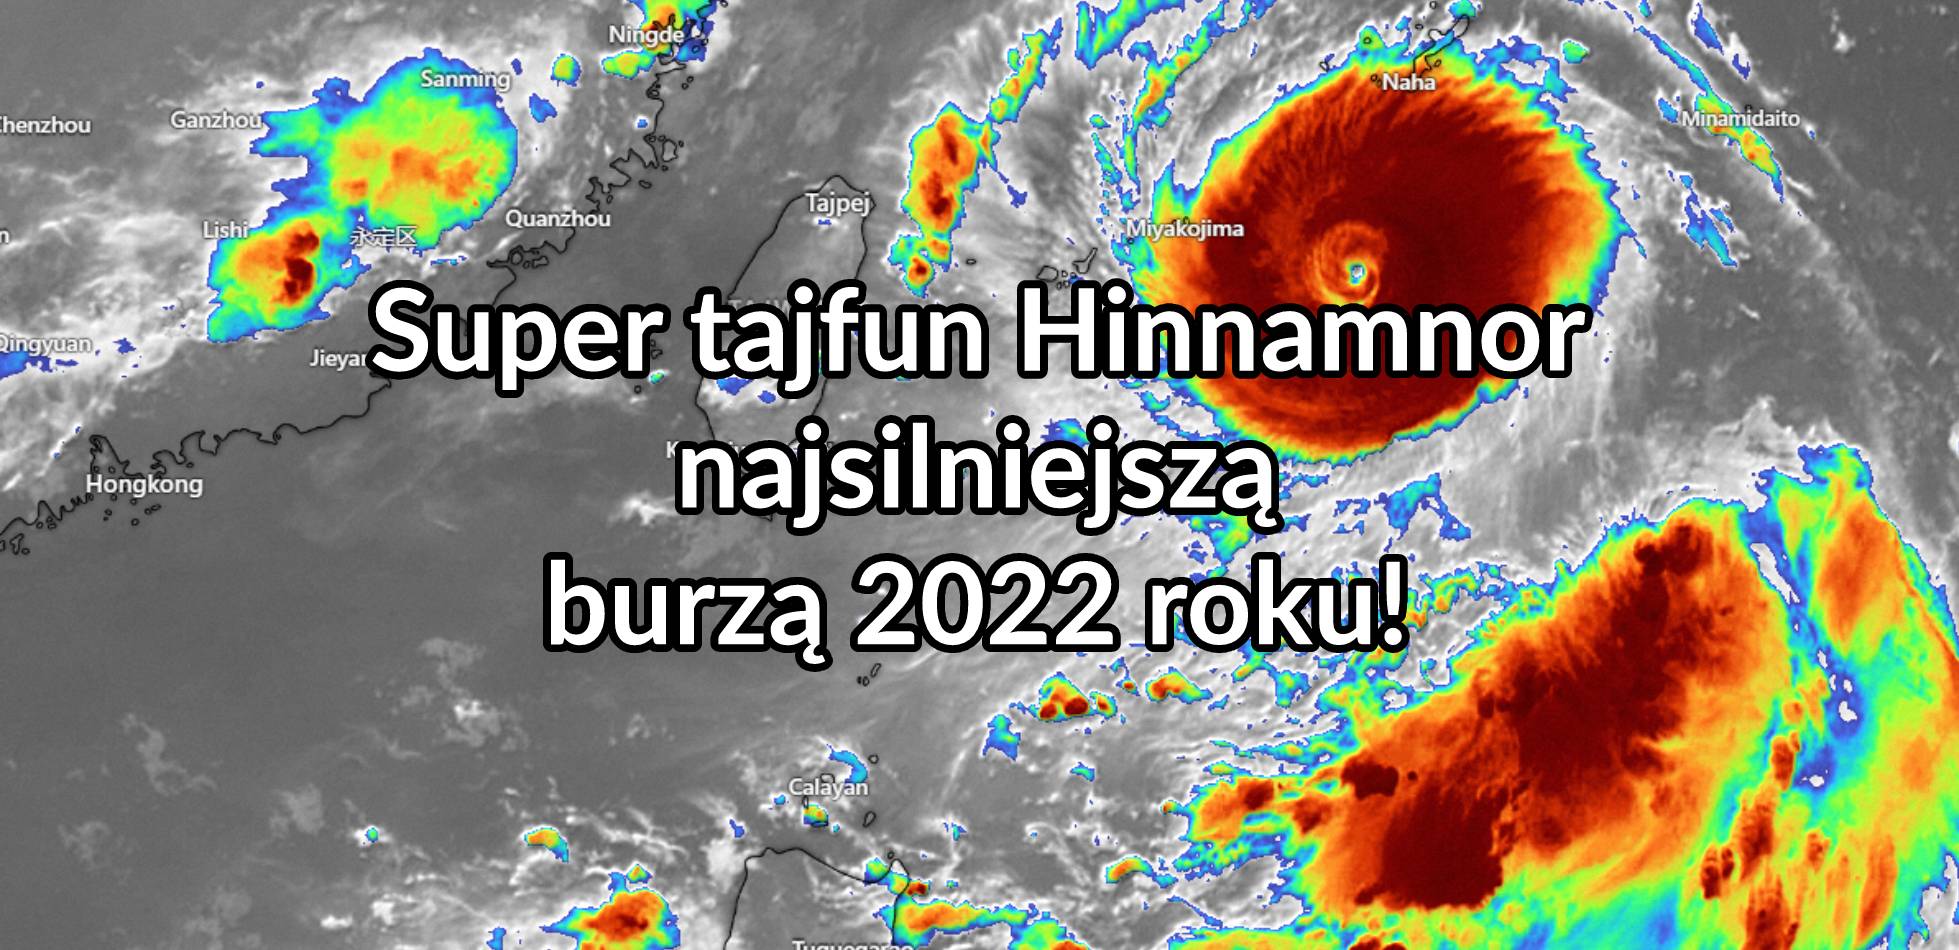 Super tajfun Hinnamnor najsilniejszą burzą 2022 roku!